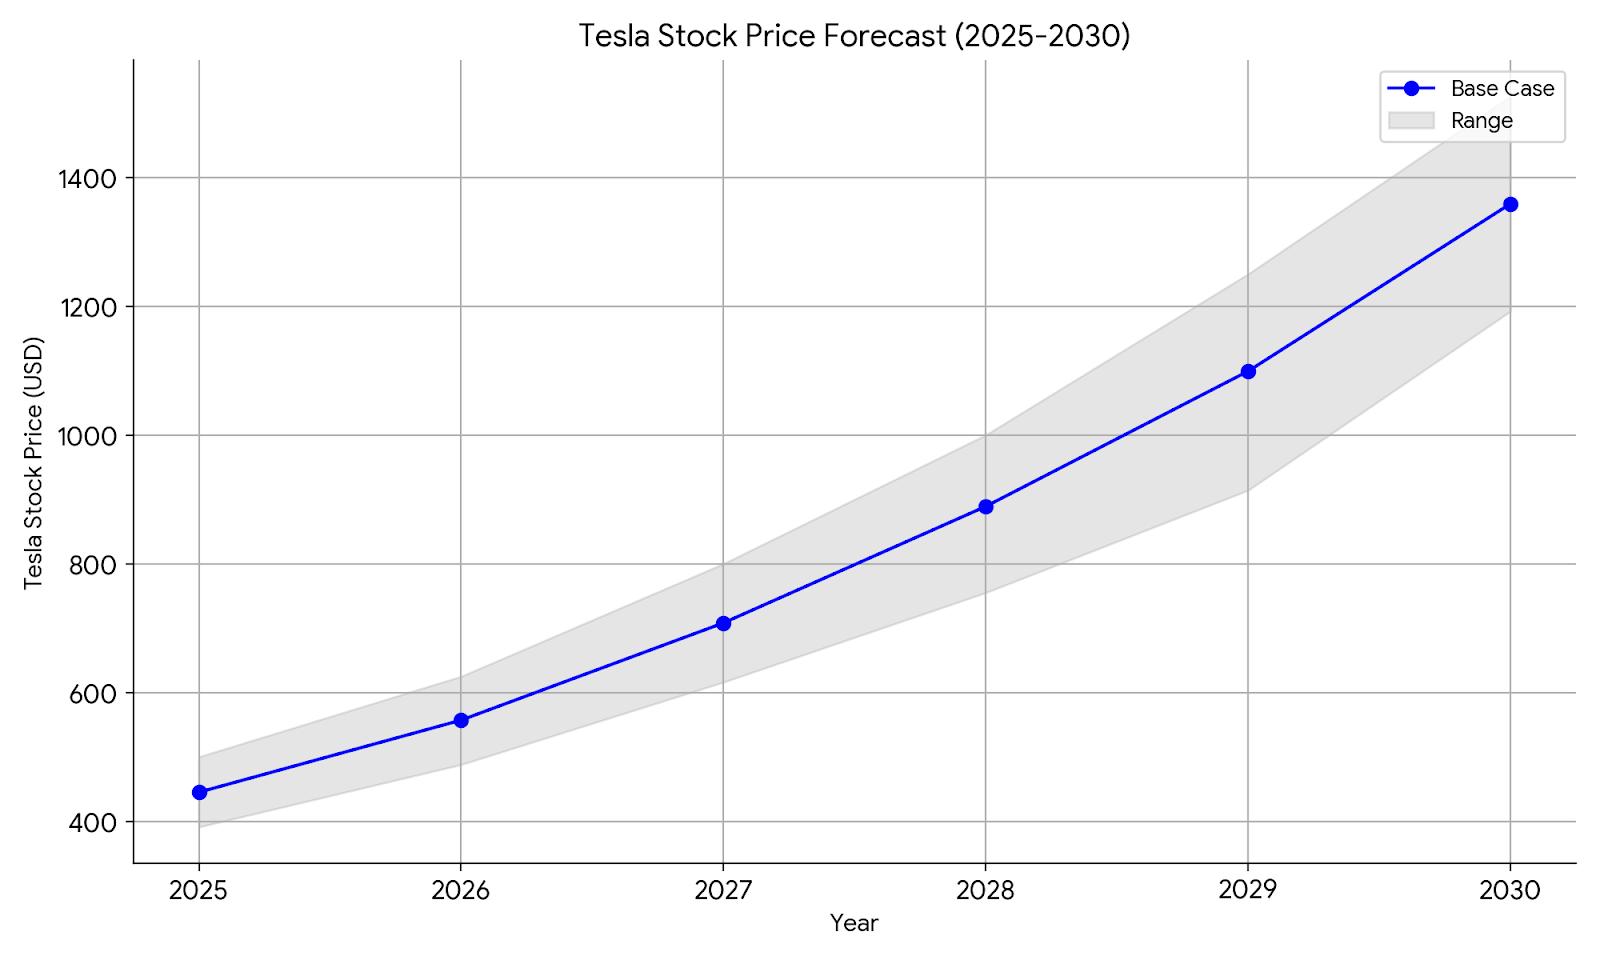 Tesla (TSLA) forecast 2025 to 2030